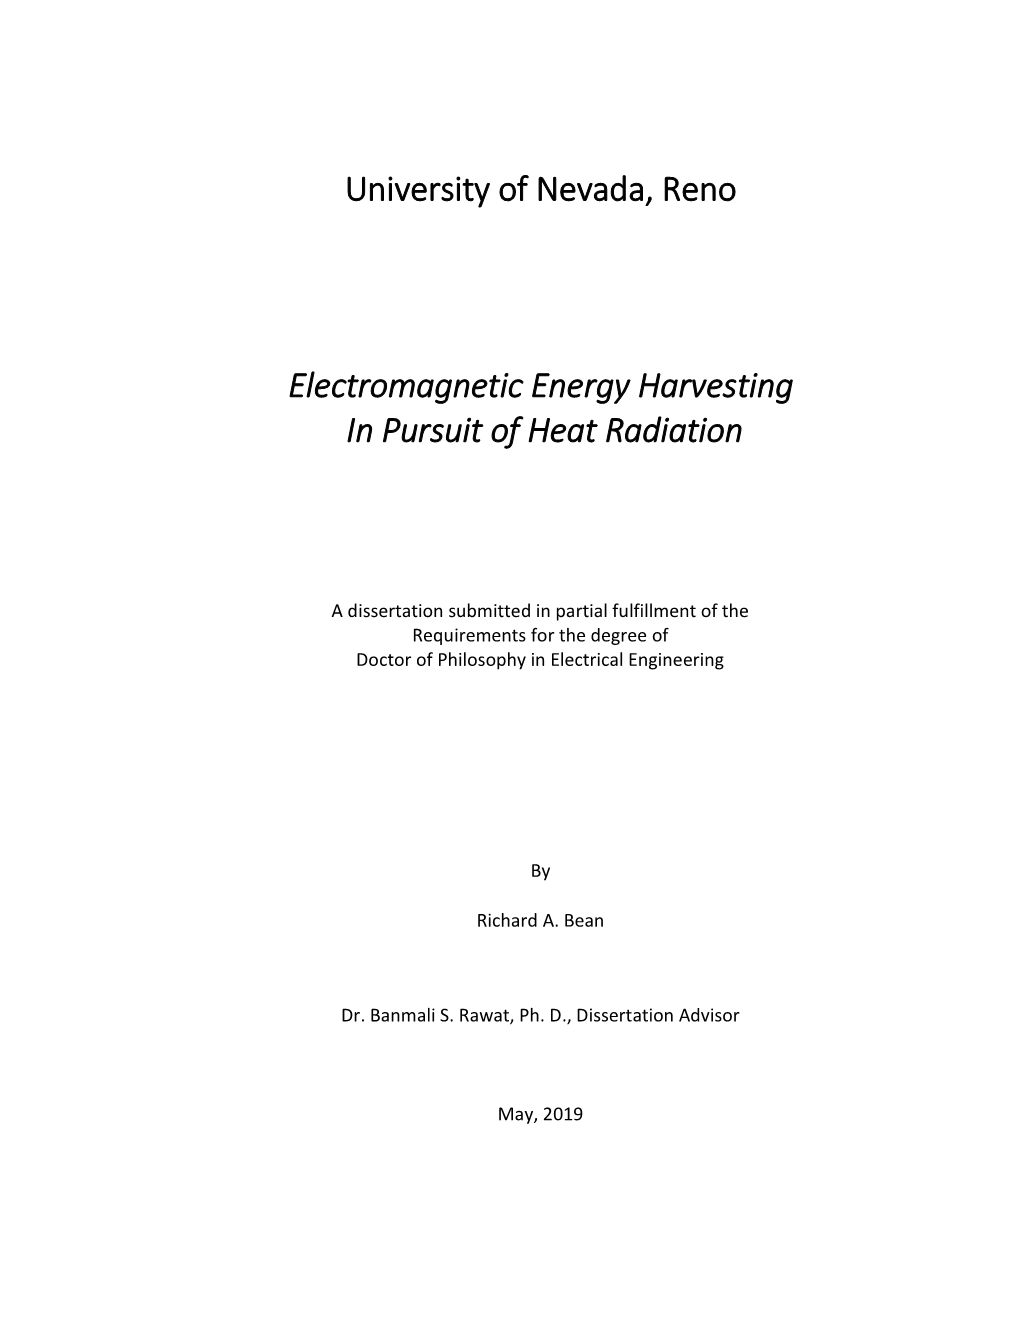 University of Nevada, Reno Electromagnetic Energy Harvesting in Pursuit of Heat Radiation